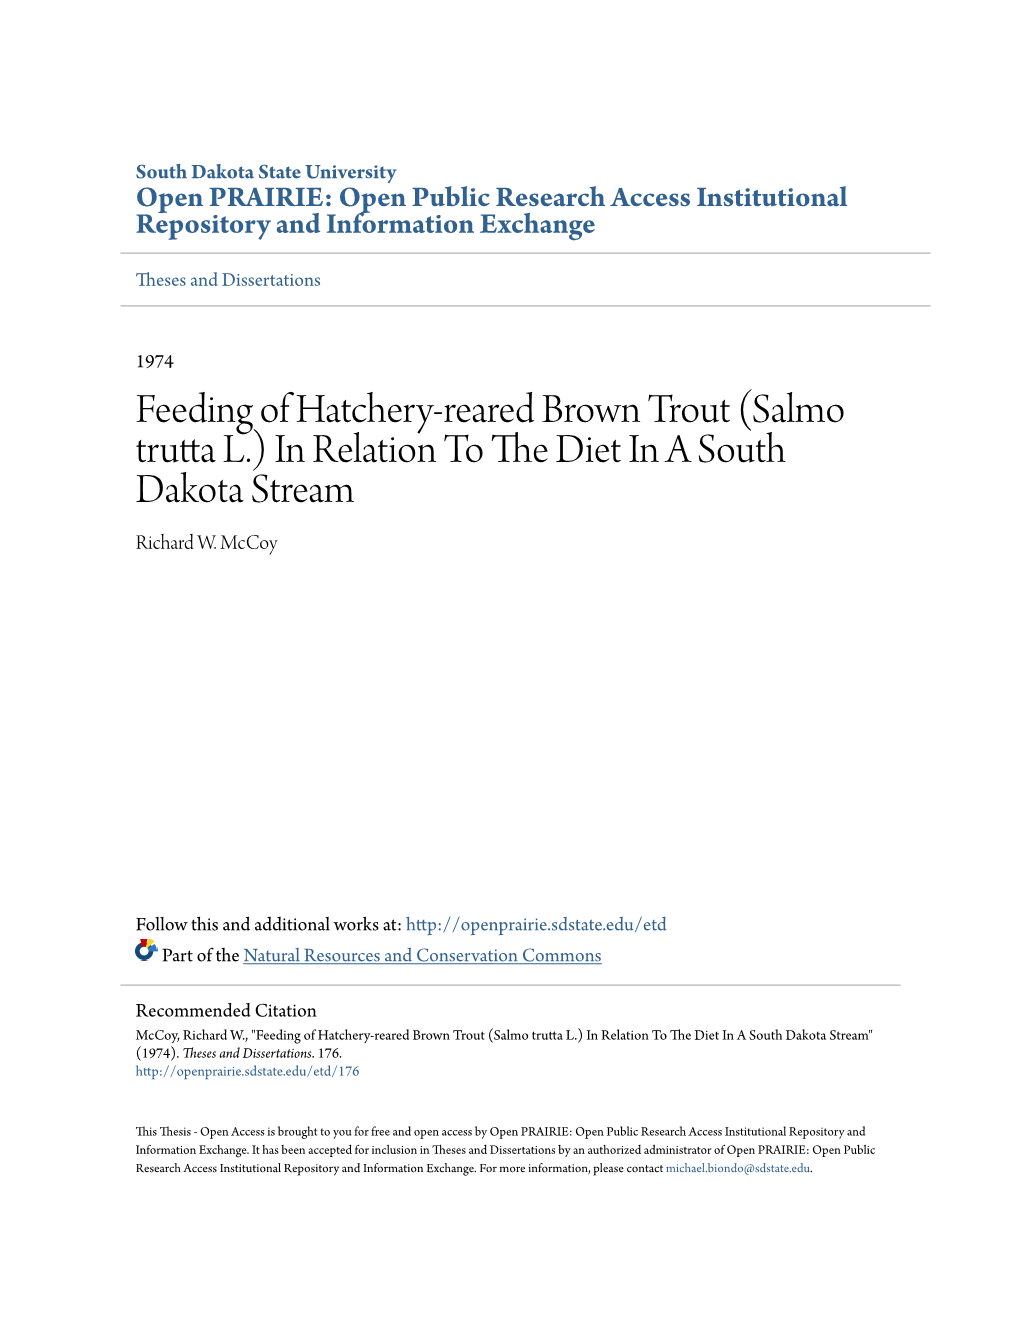 Feeding of Hatchery-Reared Brown Trout (Salmo Trutta L.) in Relation to the Diet in a South Dakota Stream Richard W